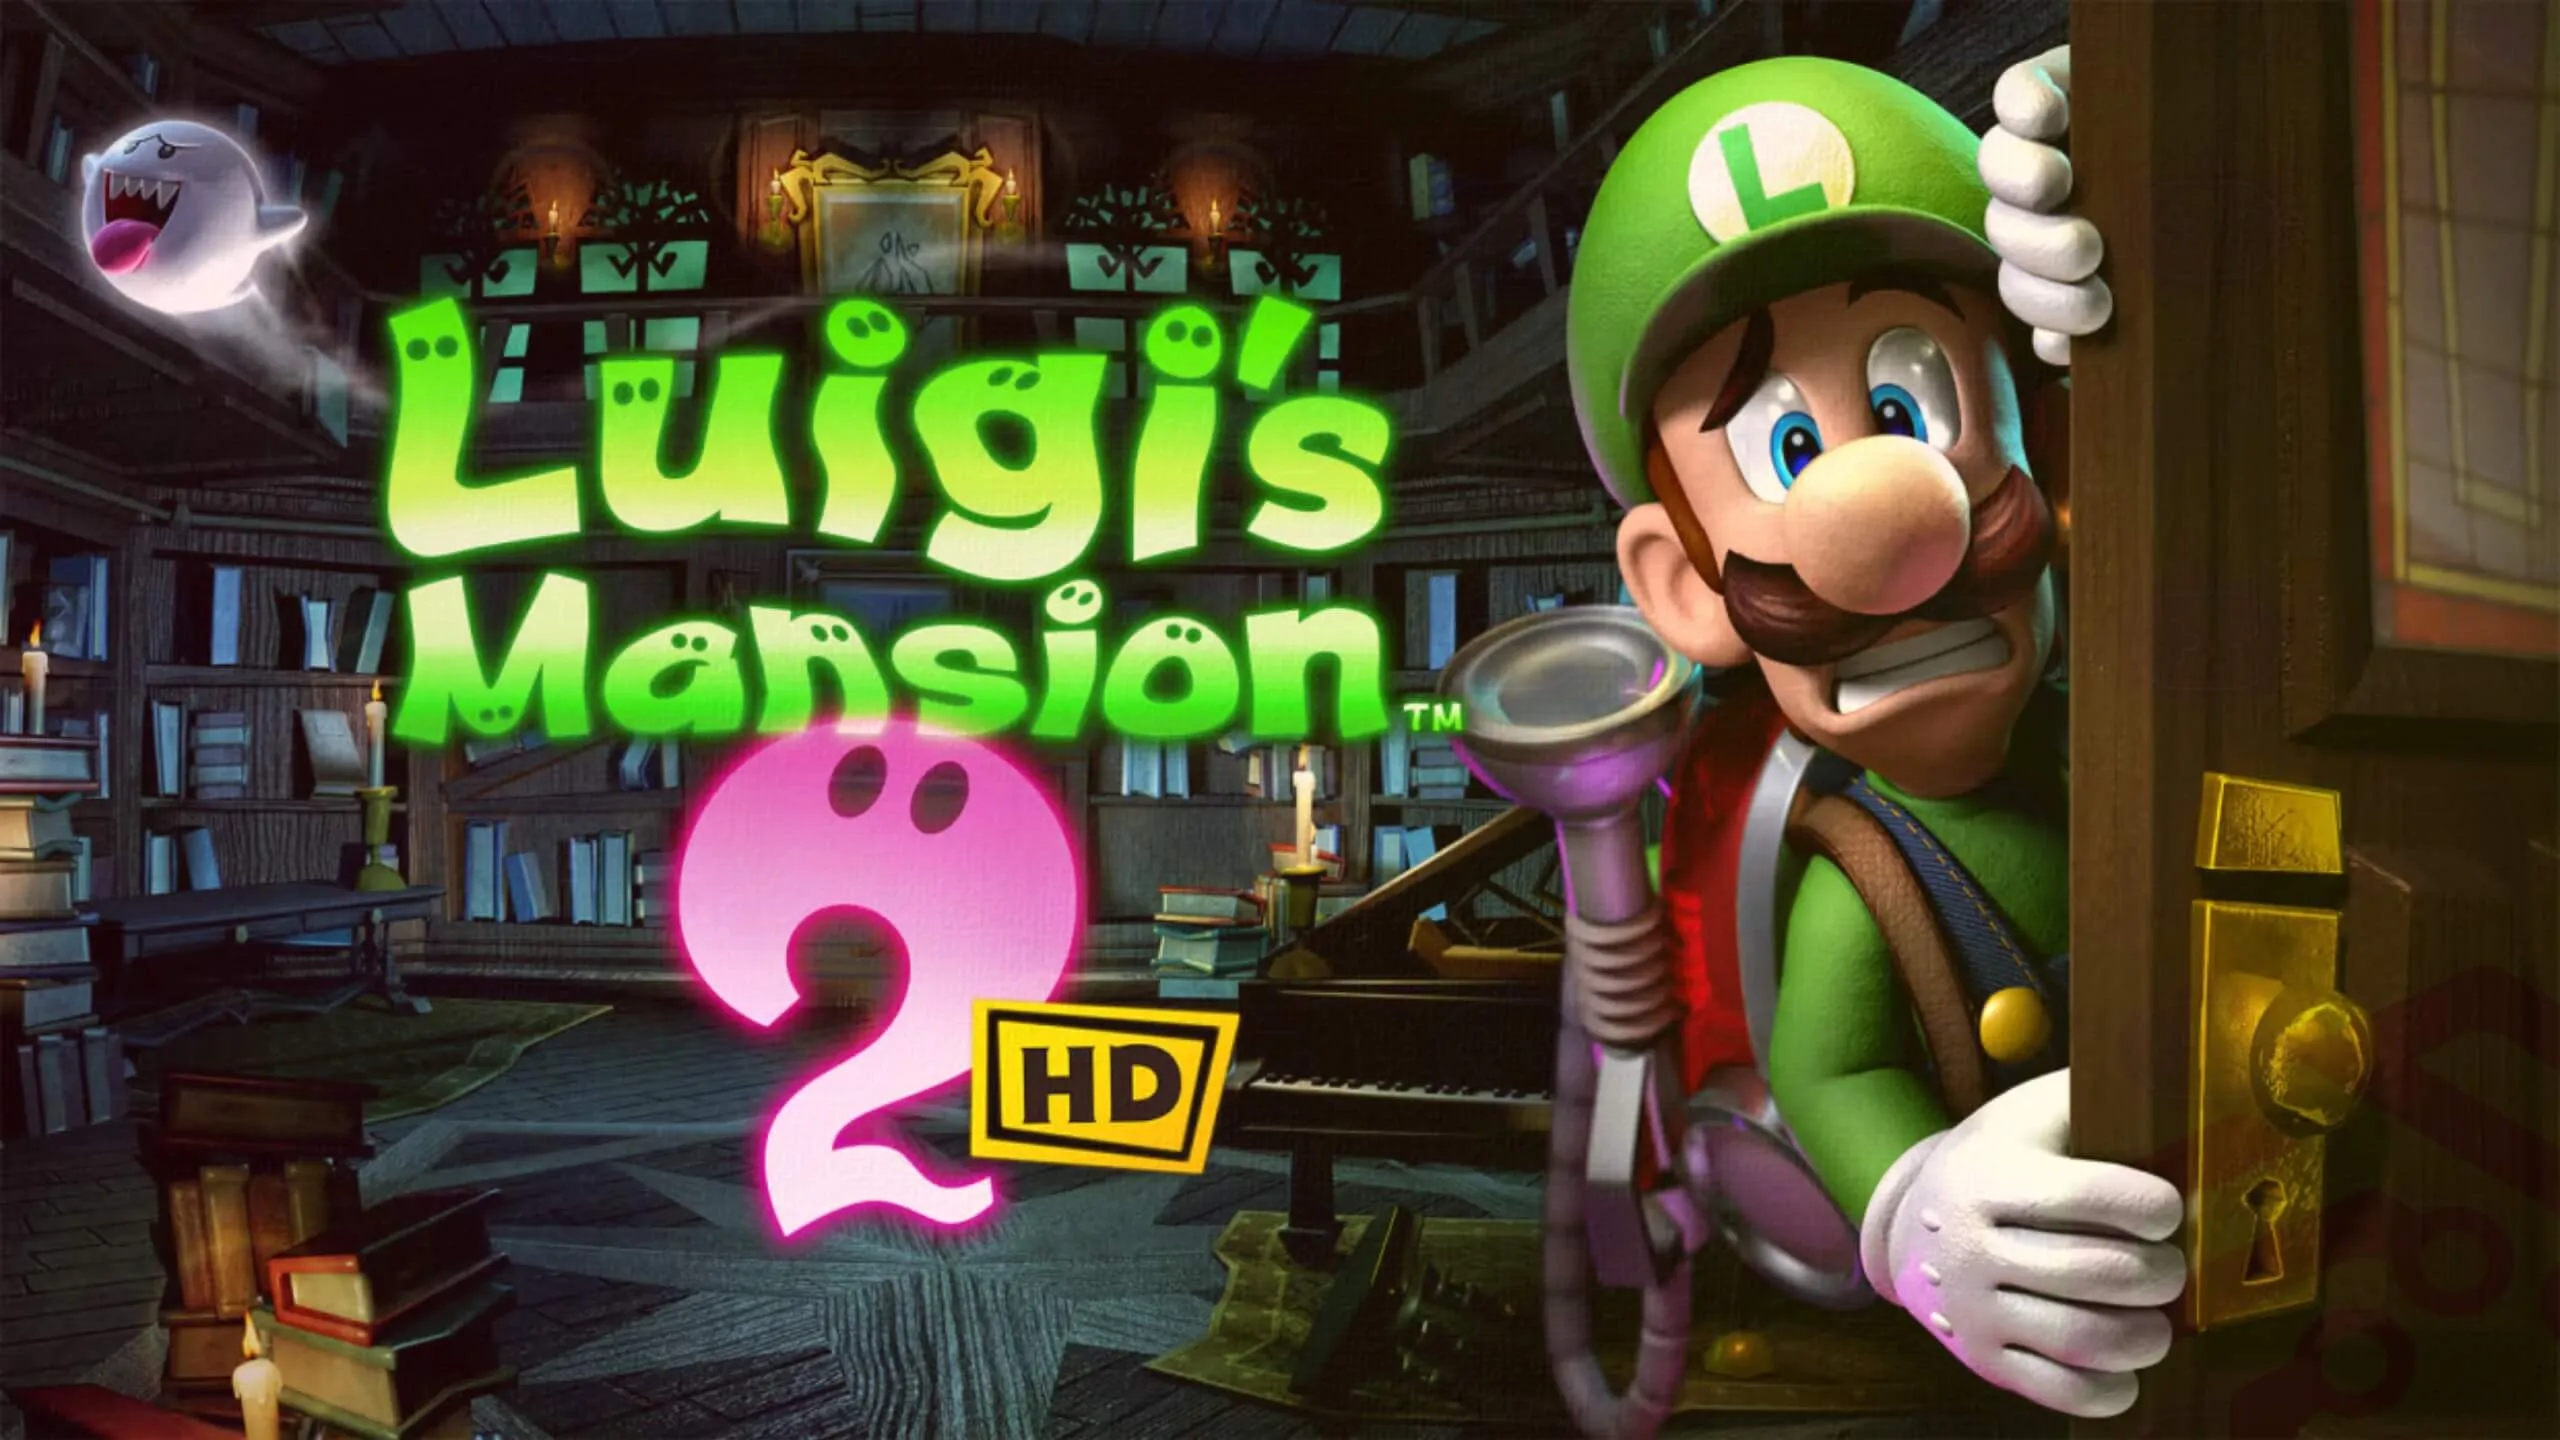 Luigi's Mansion 2 HD main art teaser